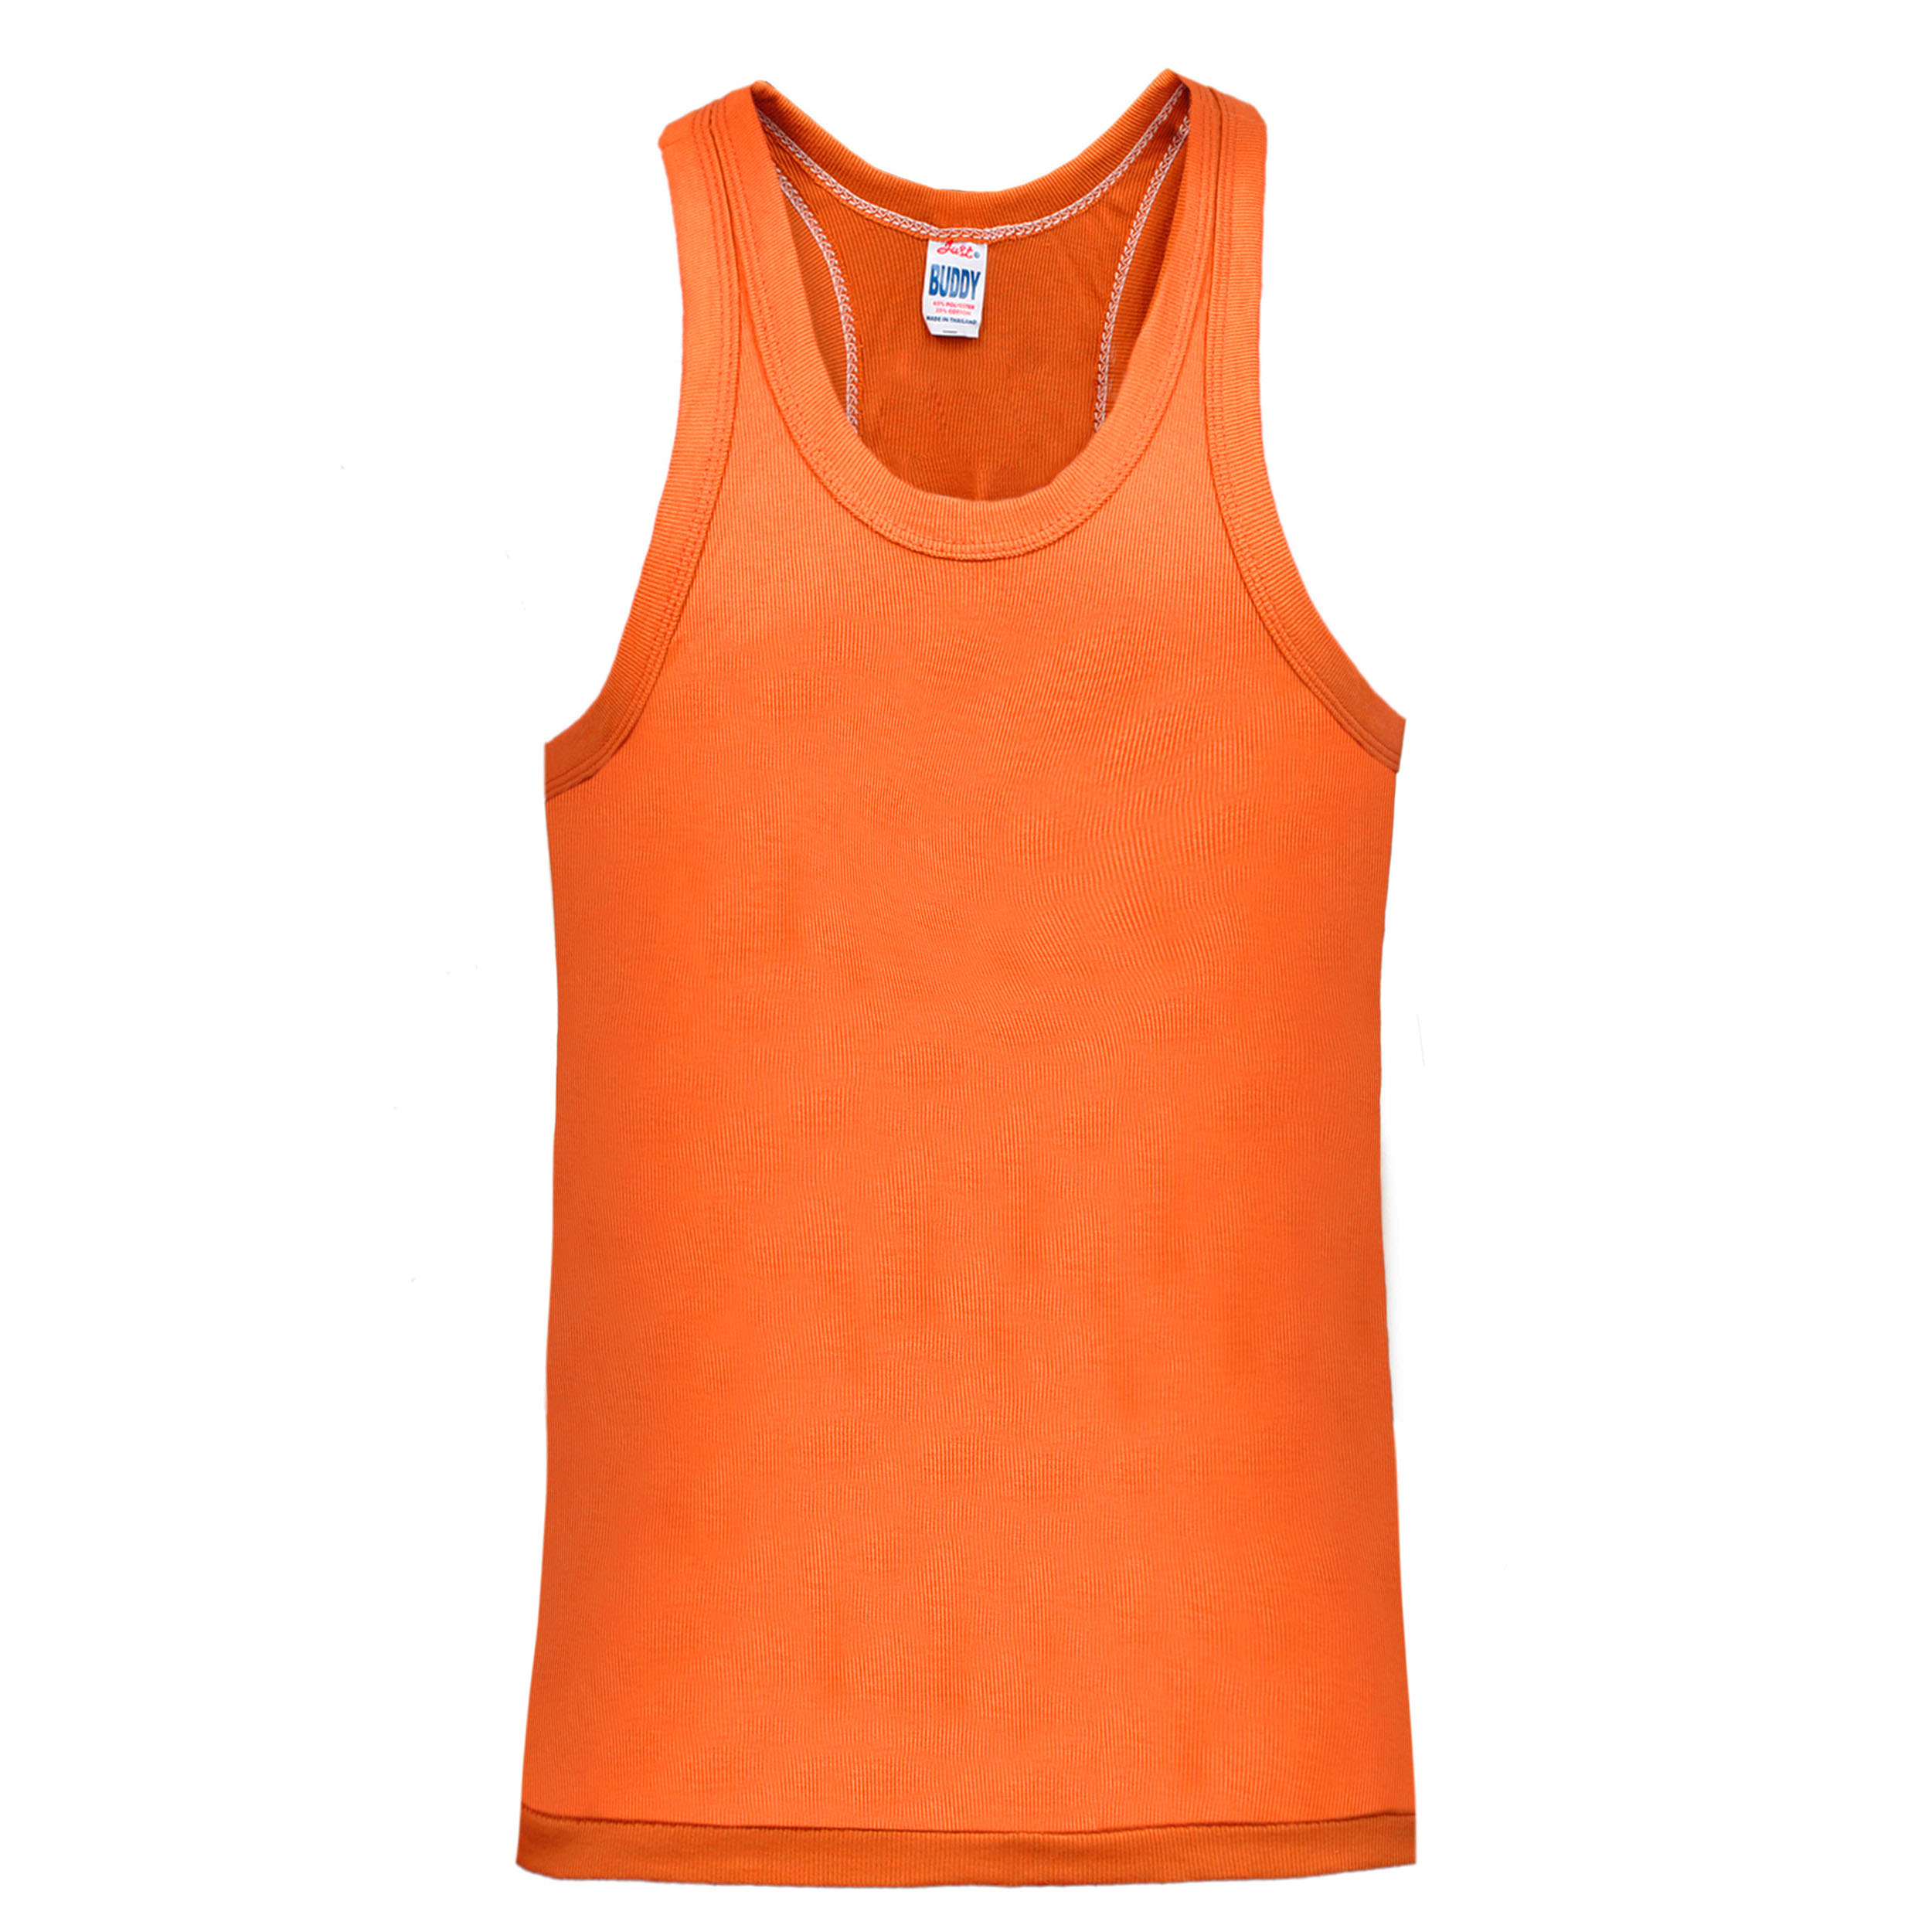 زیرپوش مردانه مدل  jhjh4552 رنگ نارنجی